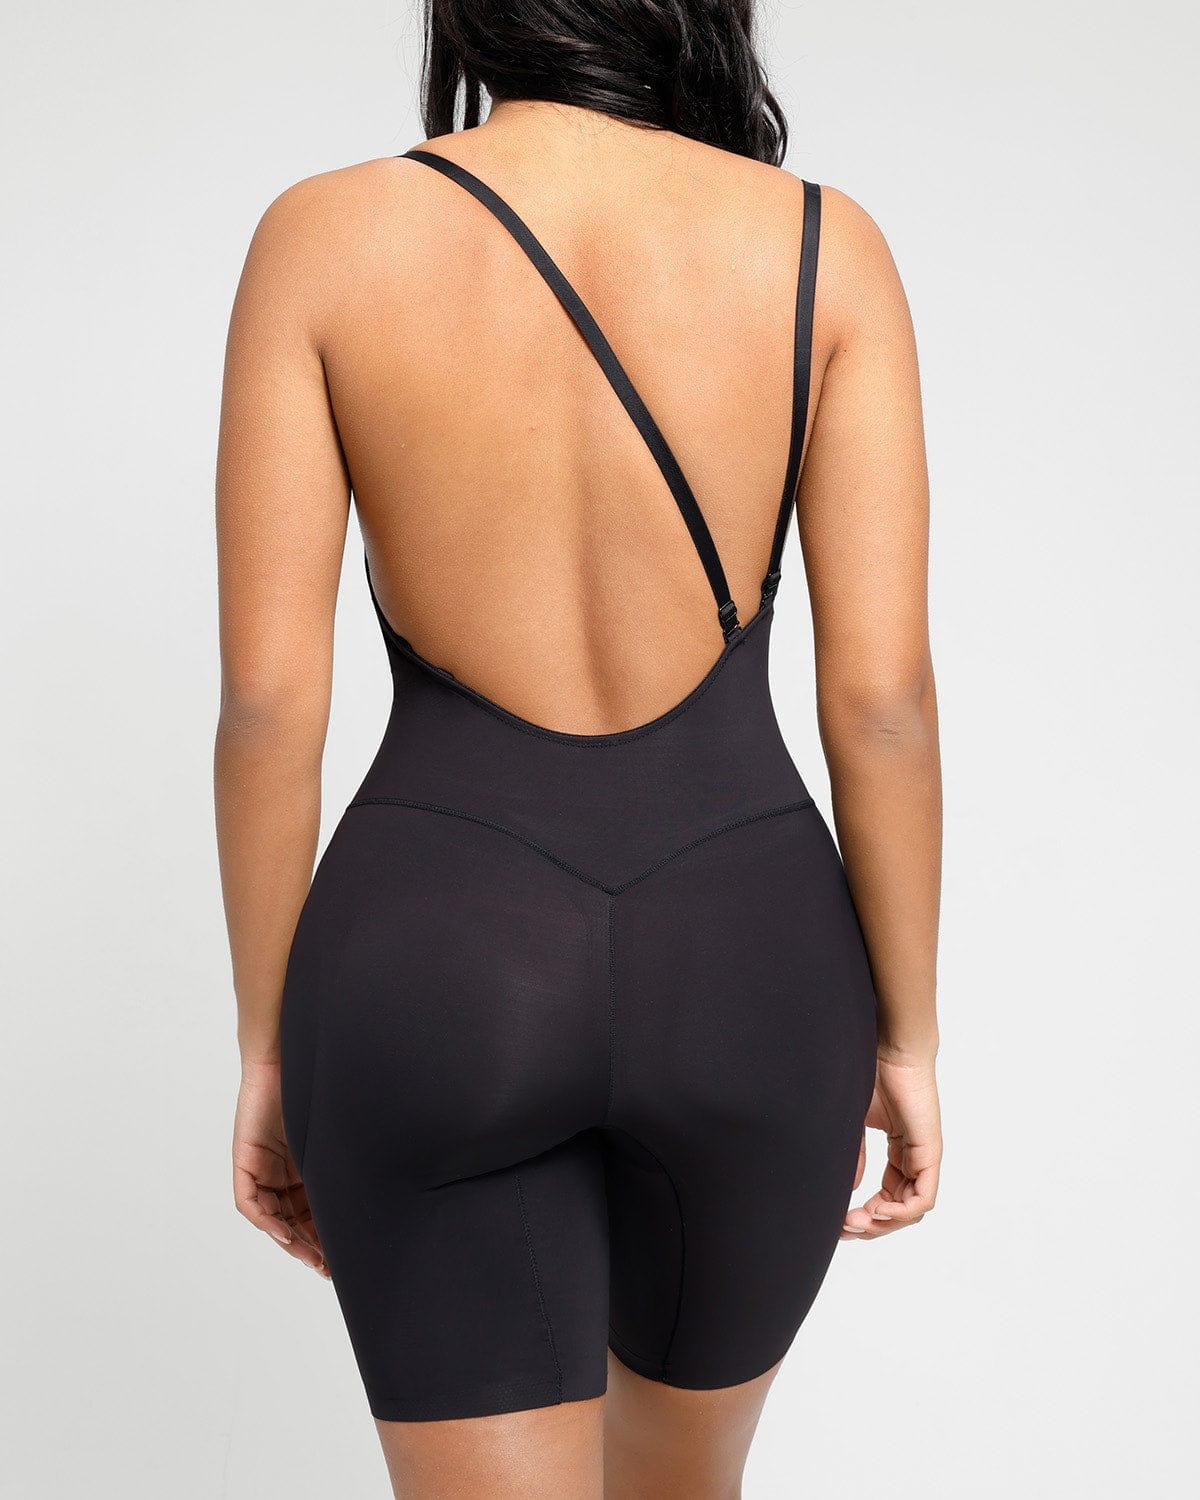 AirSlim® Backless Underwear Bodysuit